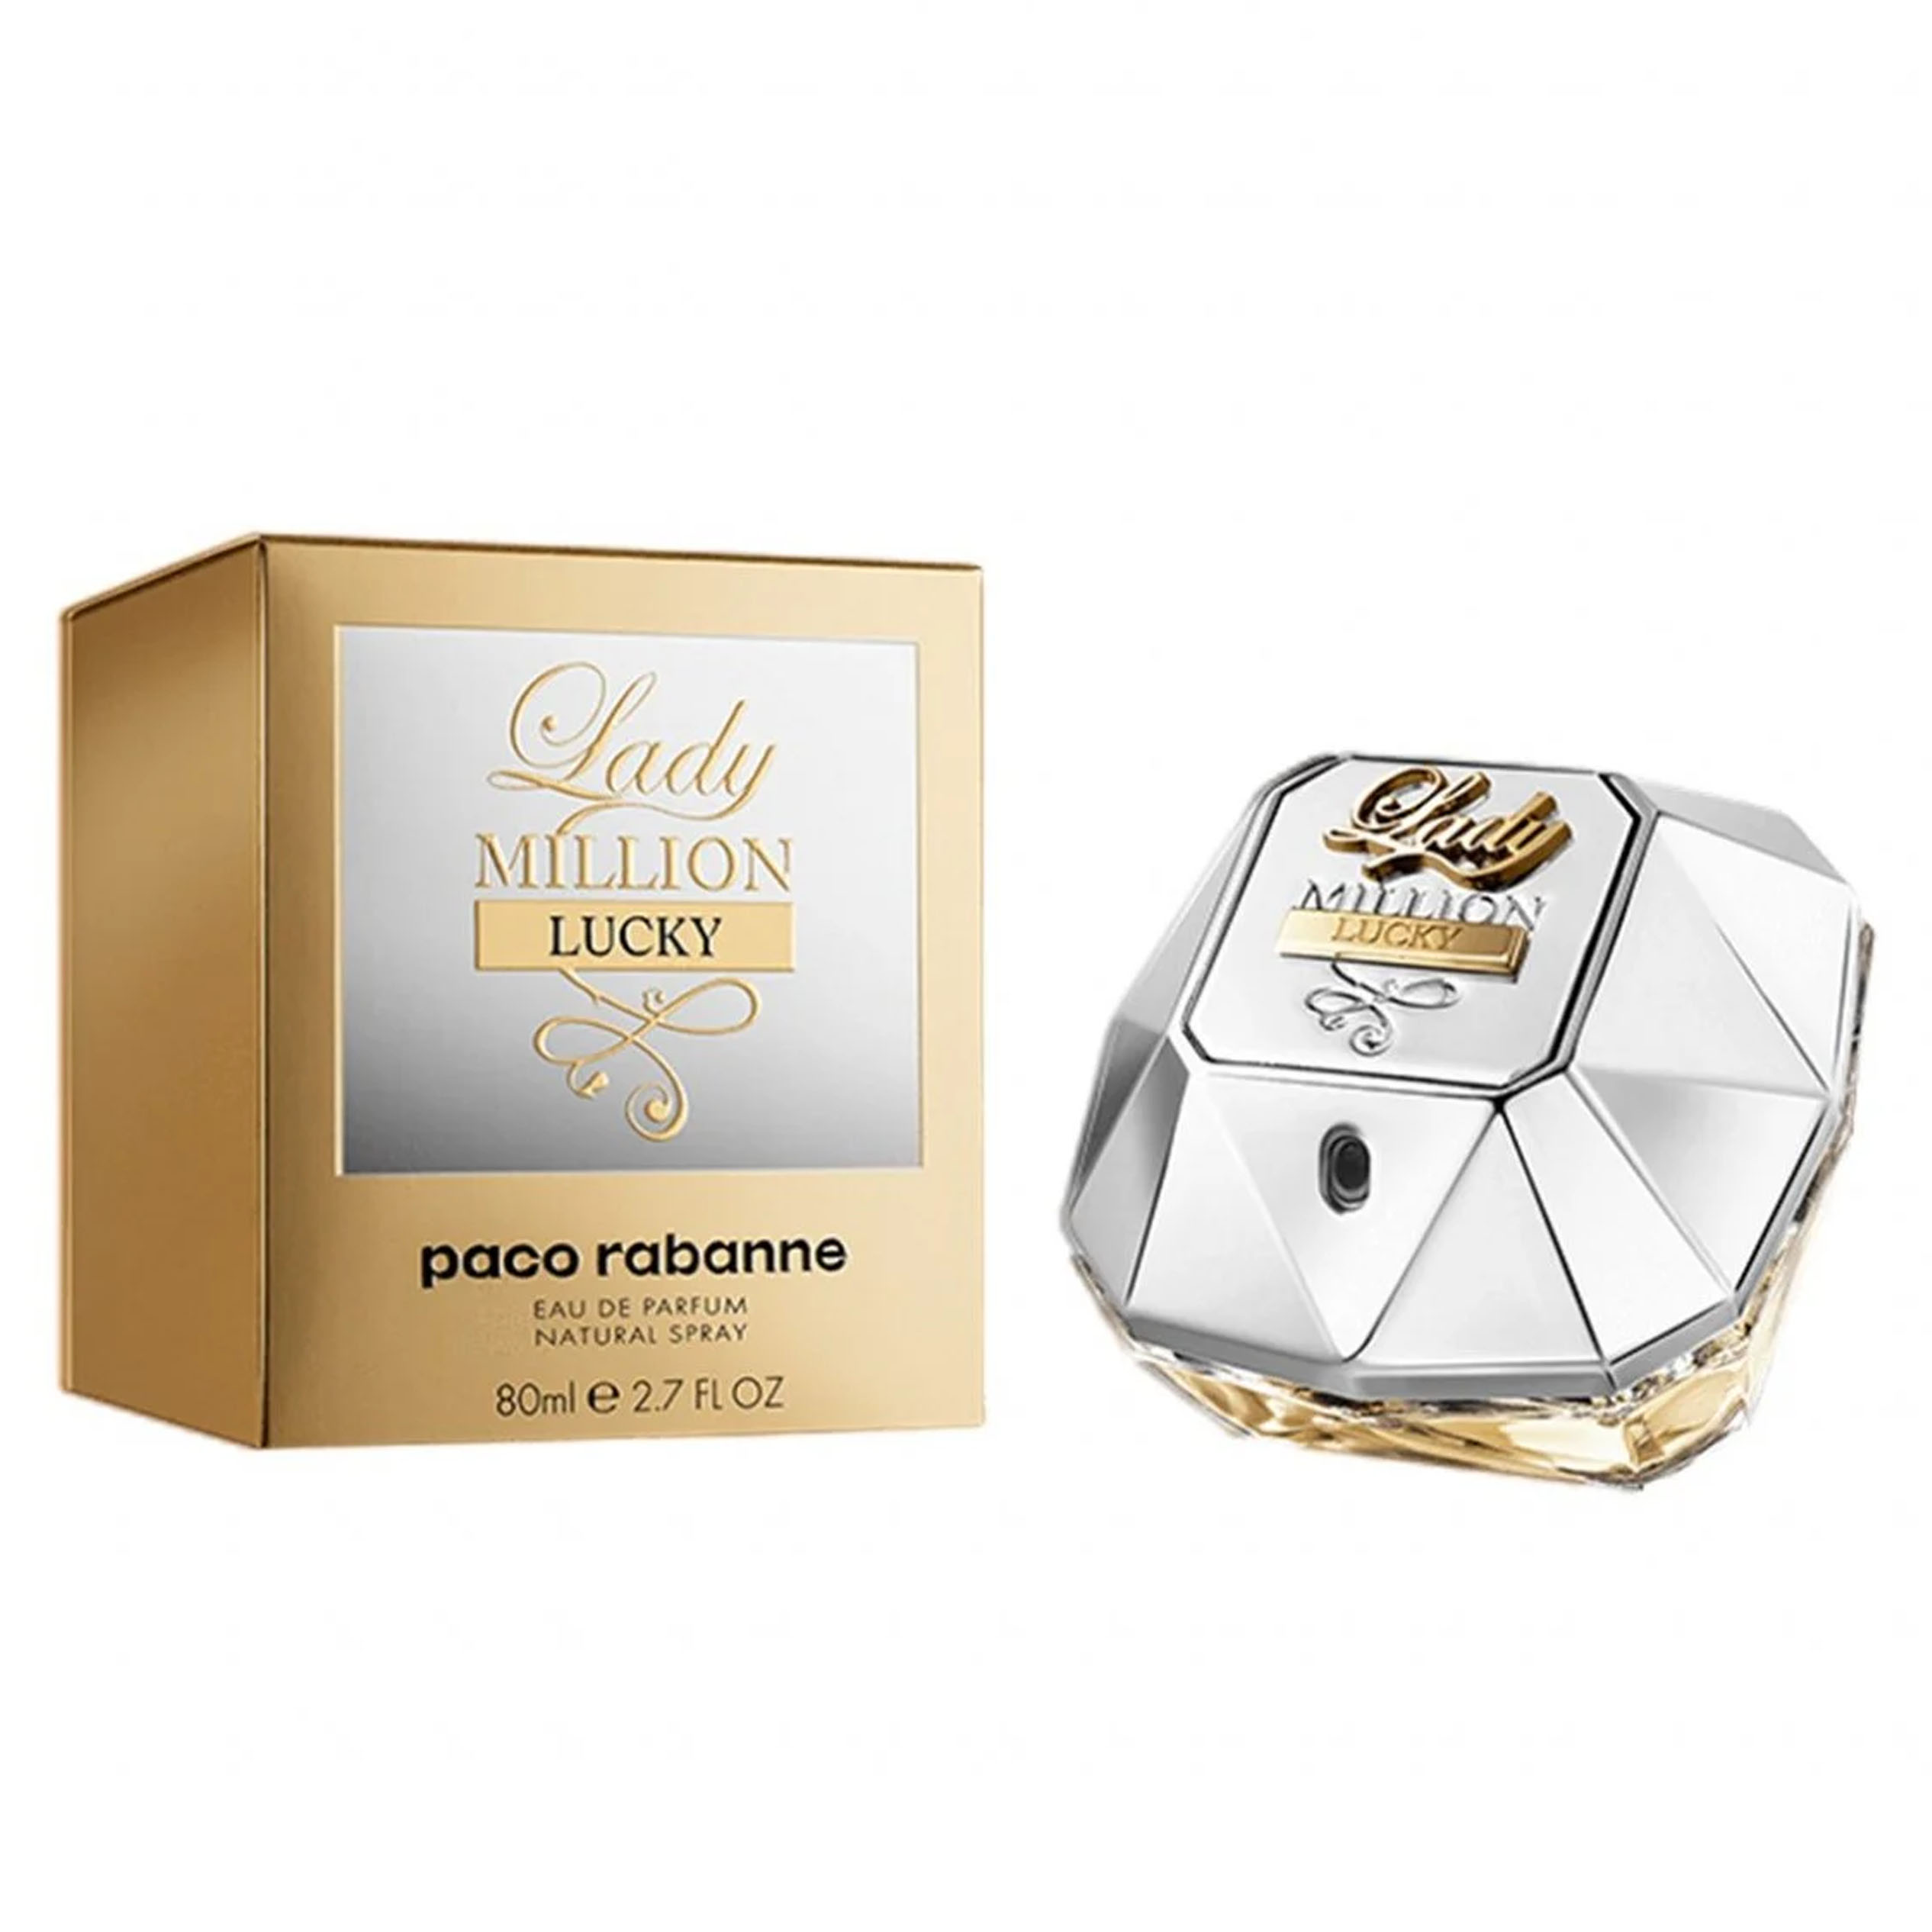 Perfume Lady Million Lucky Paco Rabanne  (Replica Con Fragancia Importada)- Mujer